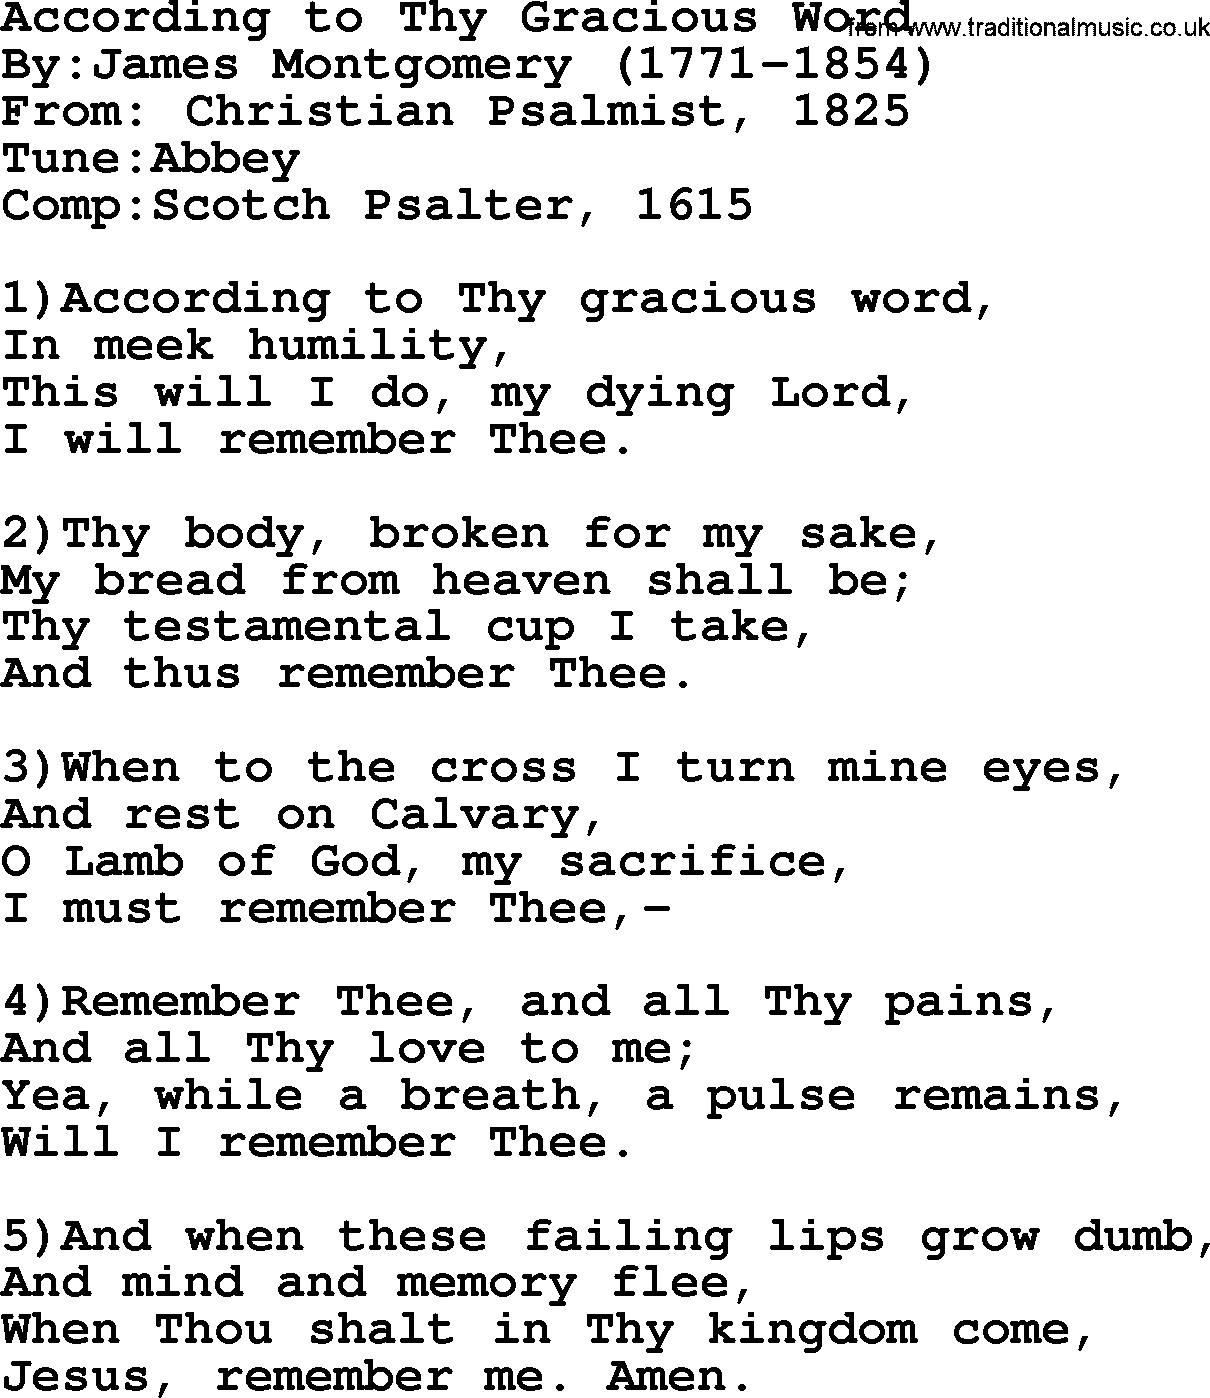 Methodist Hymn: According To Thy Gracious Word, lyrics